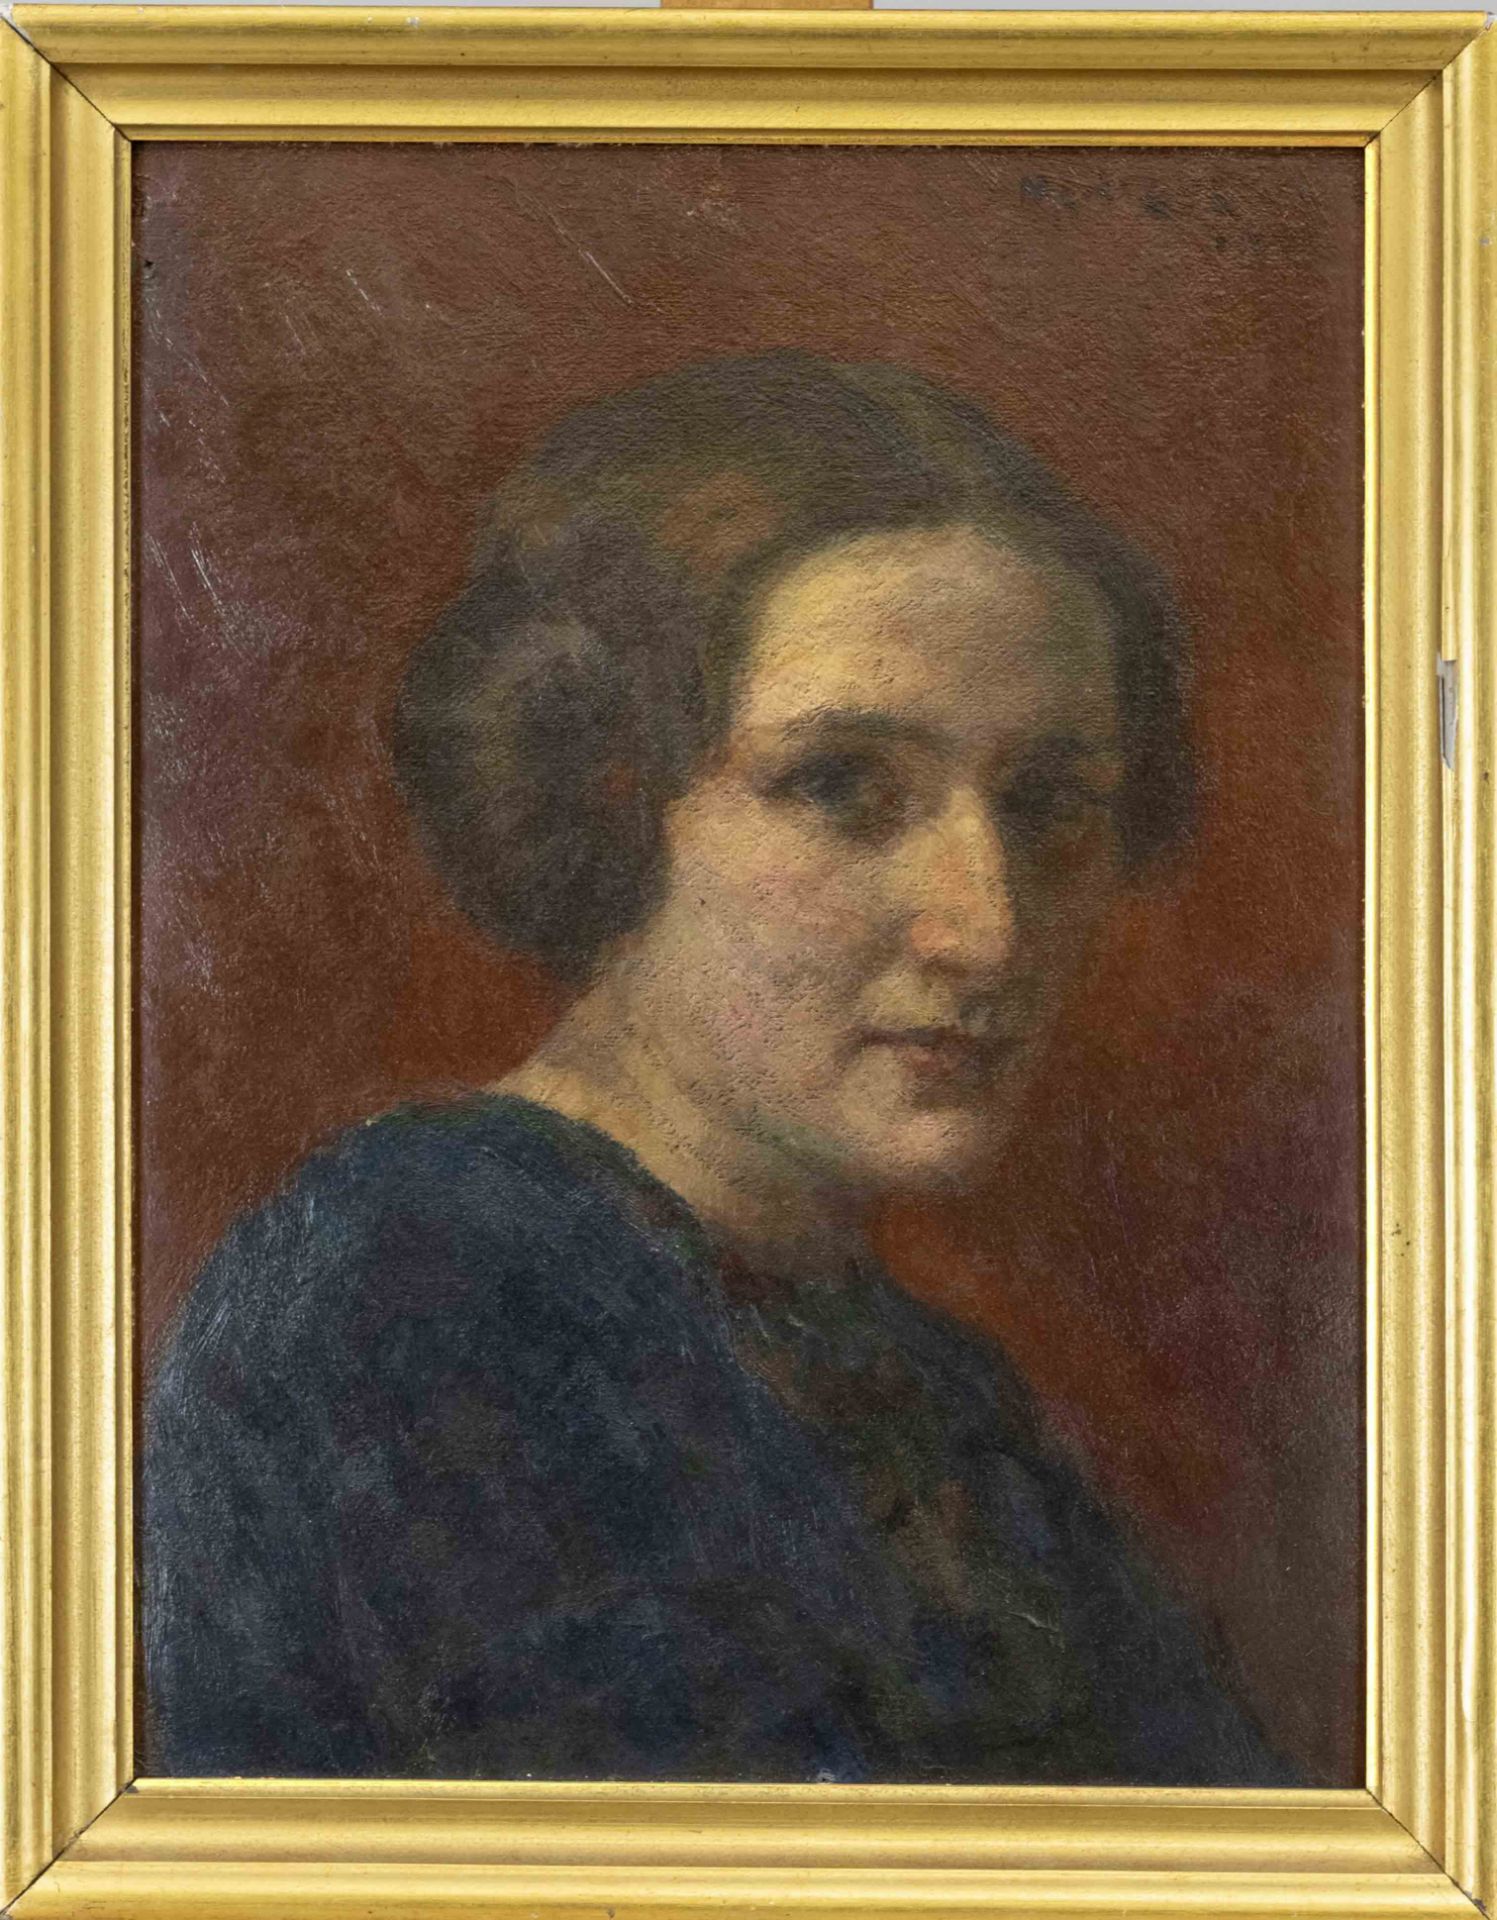 Maurycy Medrzycki (1890-1951) (French: Maurice Mendjisky), Polish painter who joined the ''École